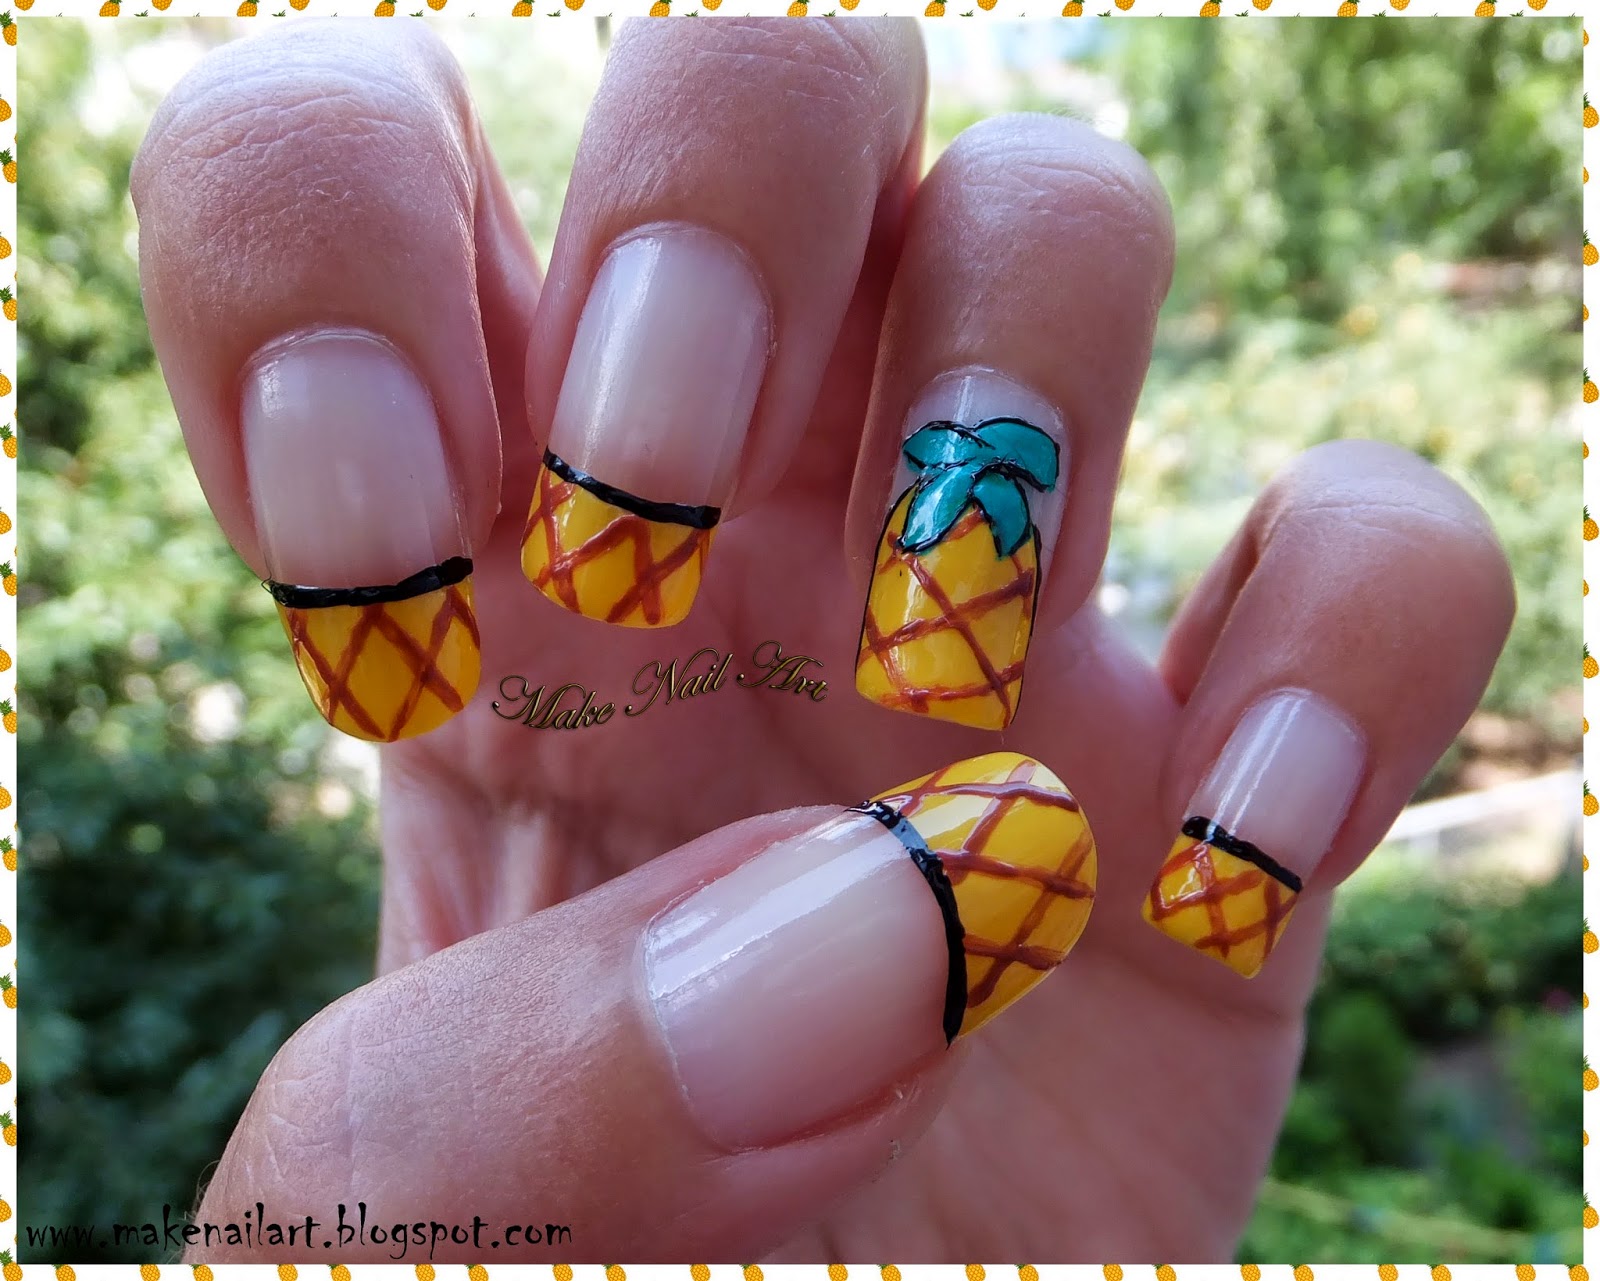 3. Pineapple Nail Art Tutorial - wide 6